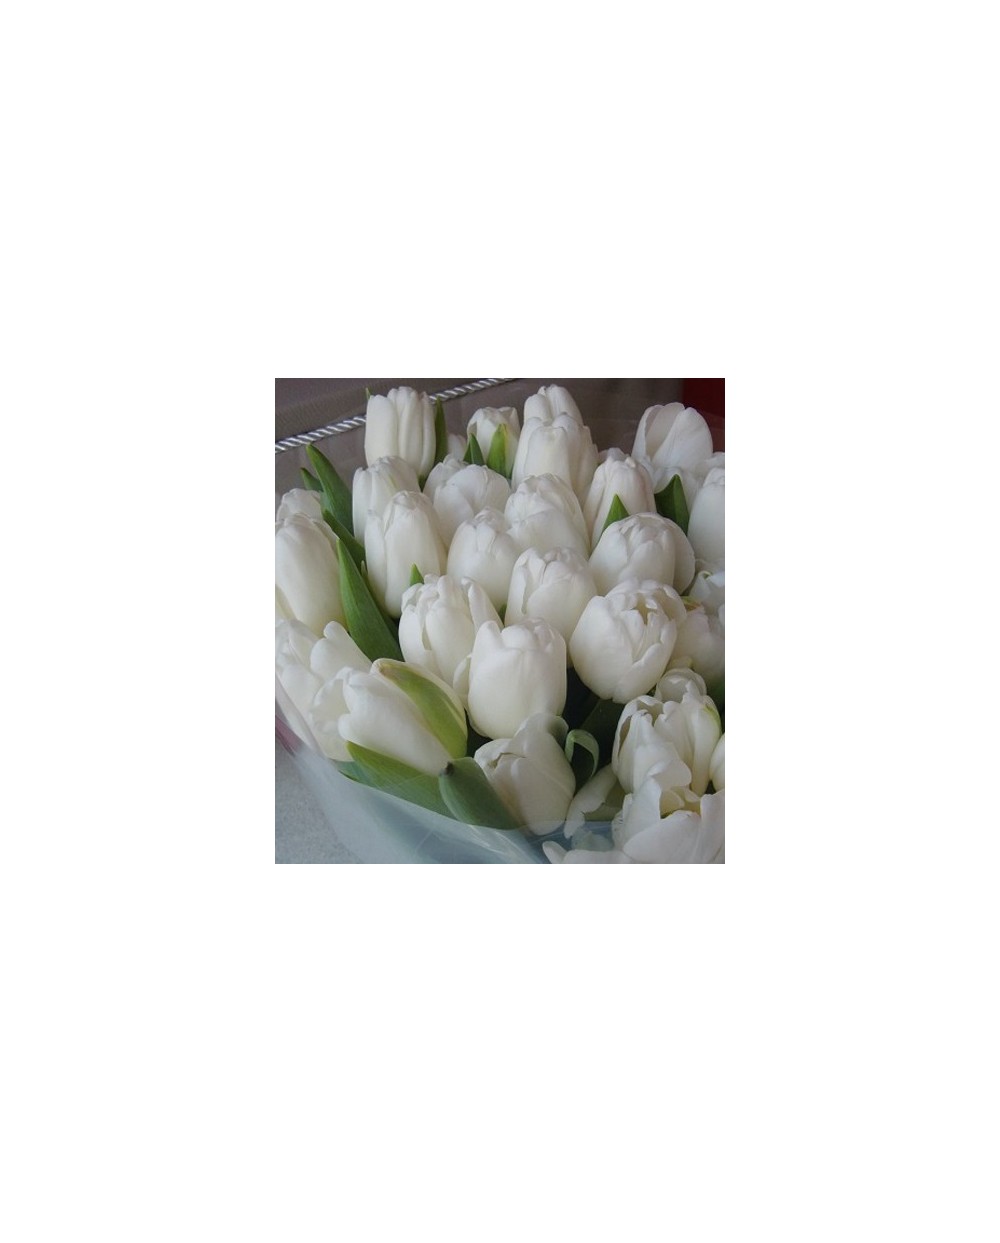 Tulips-006